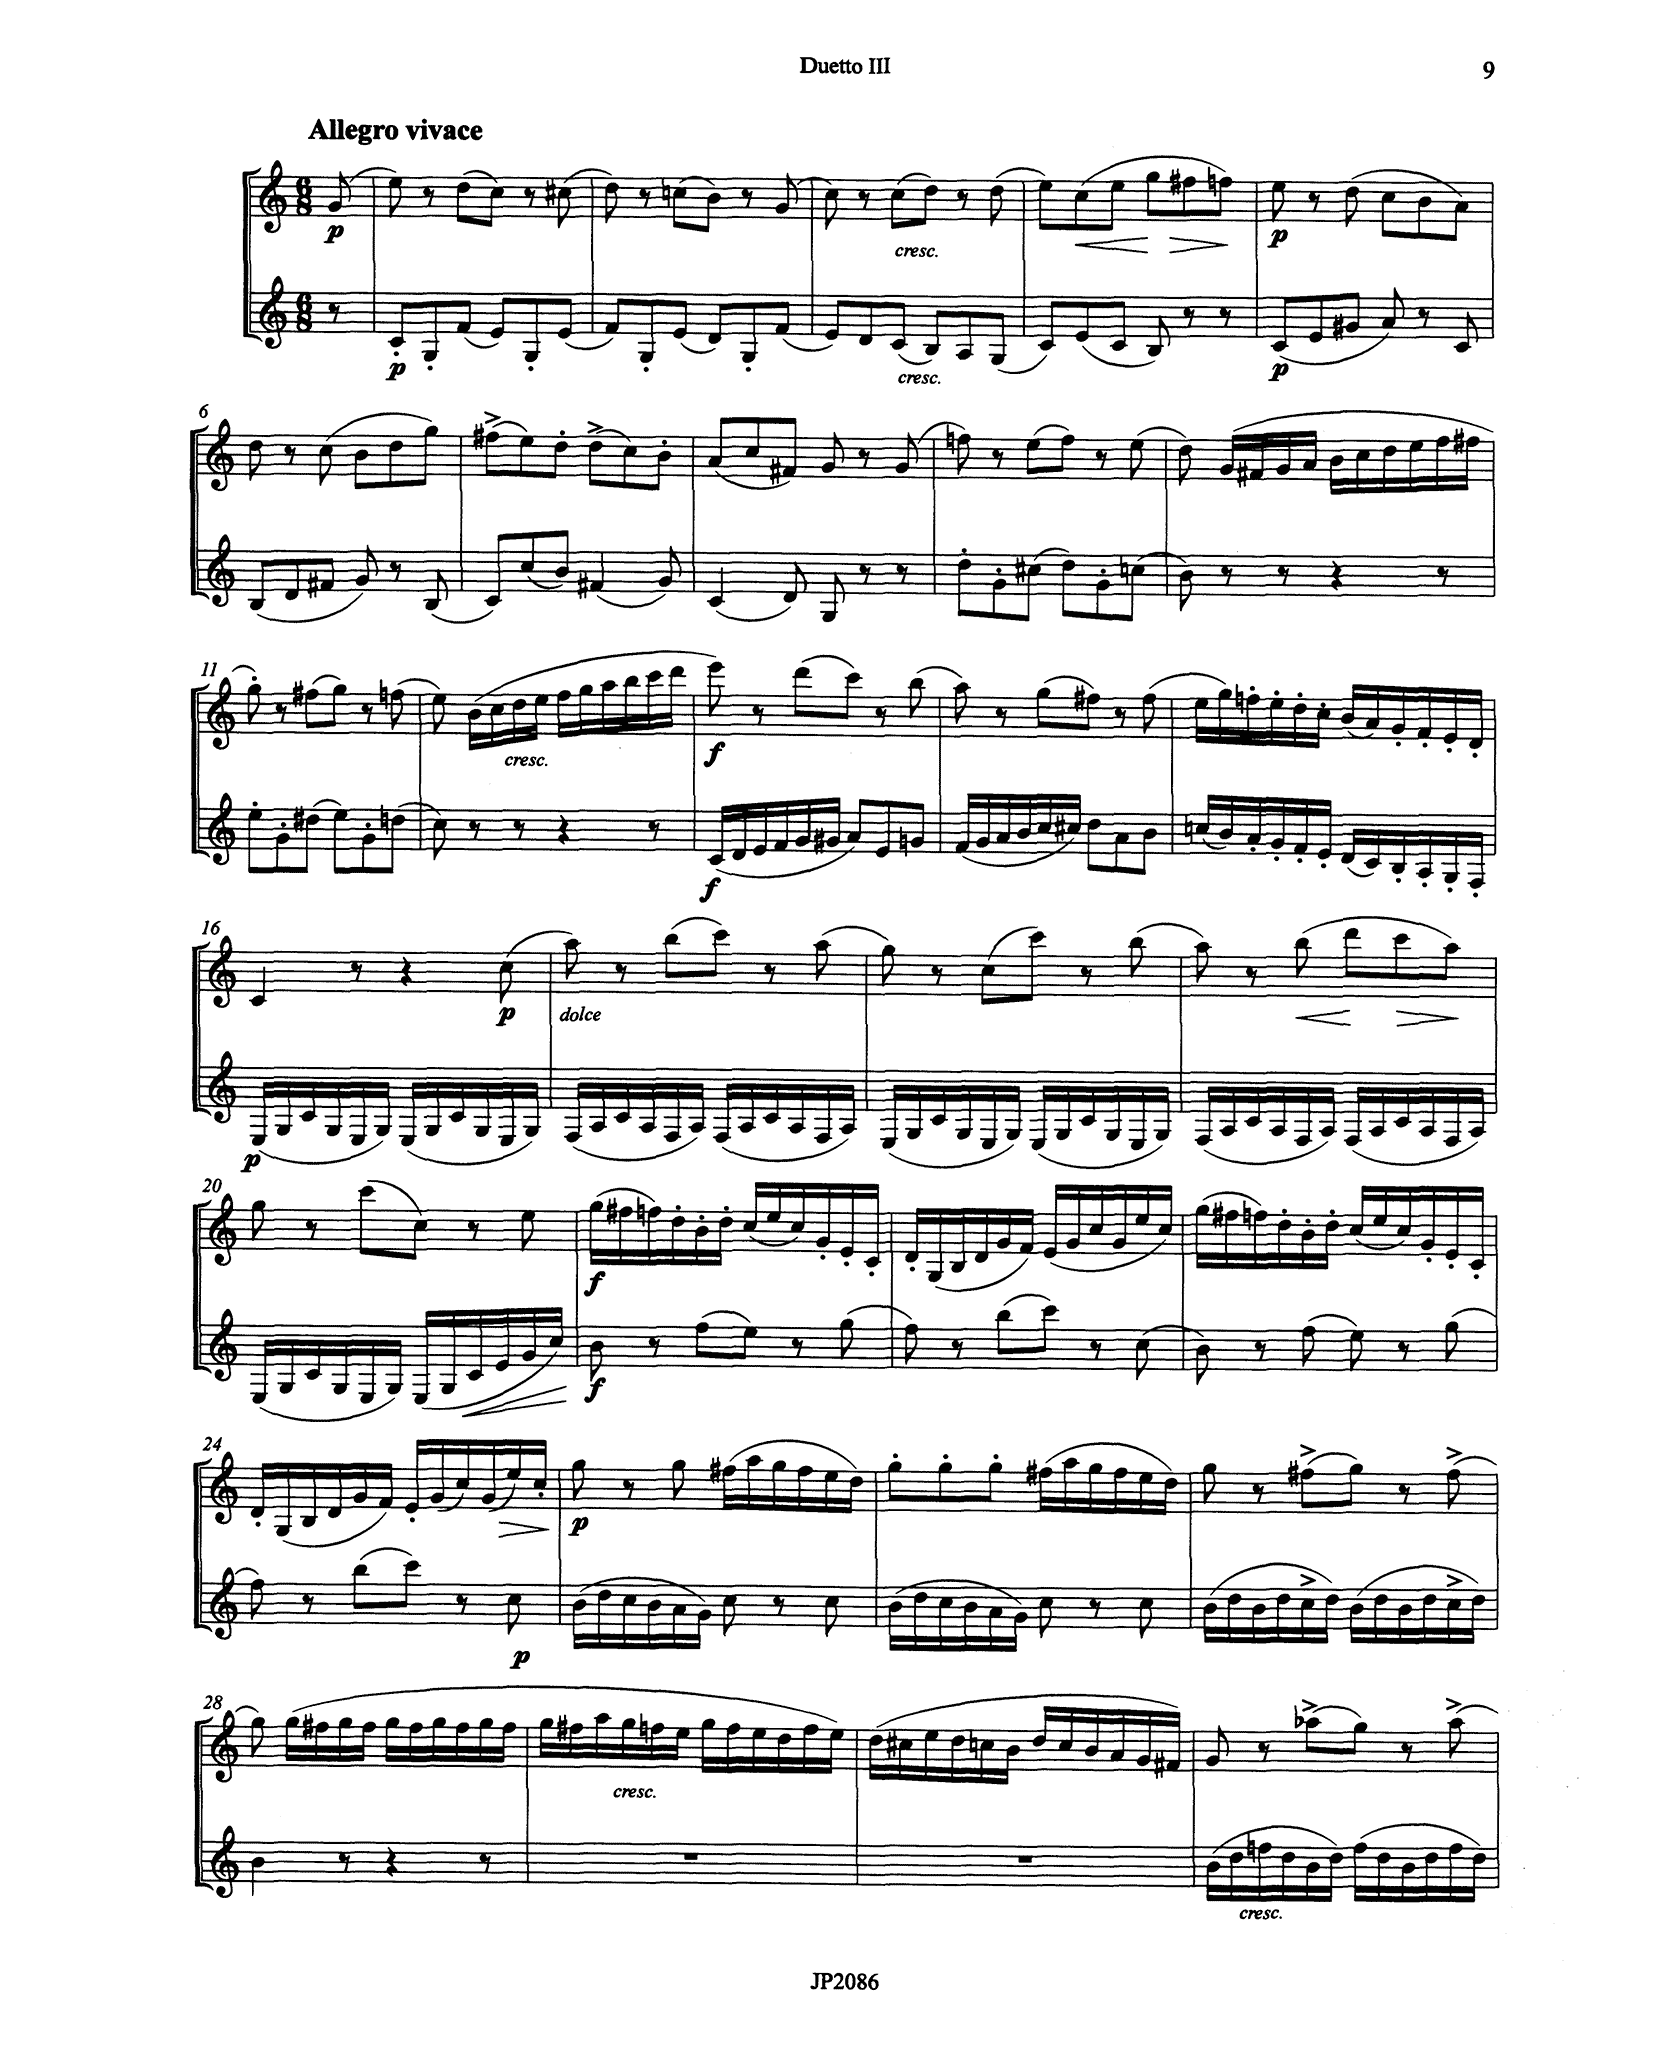 Crusell Clarinet Duet No. 3 in C Major score - movement 3